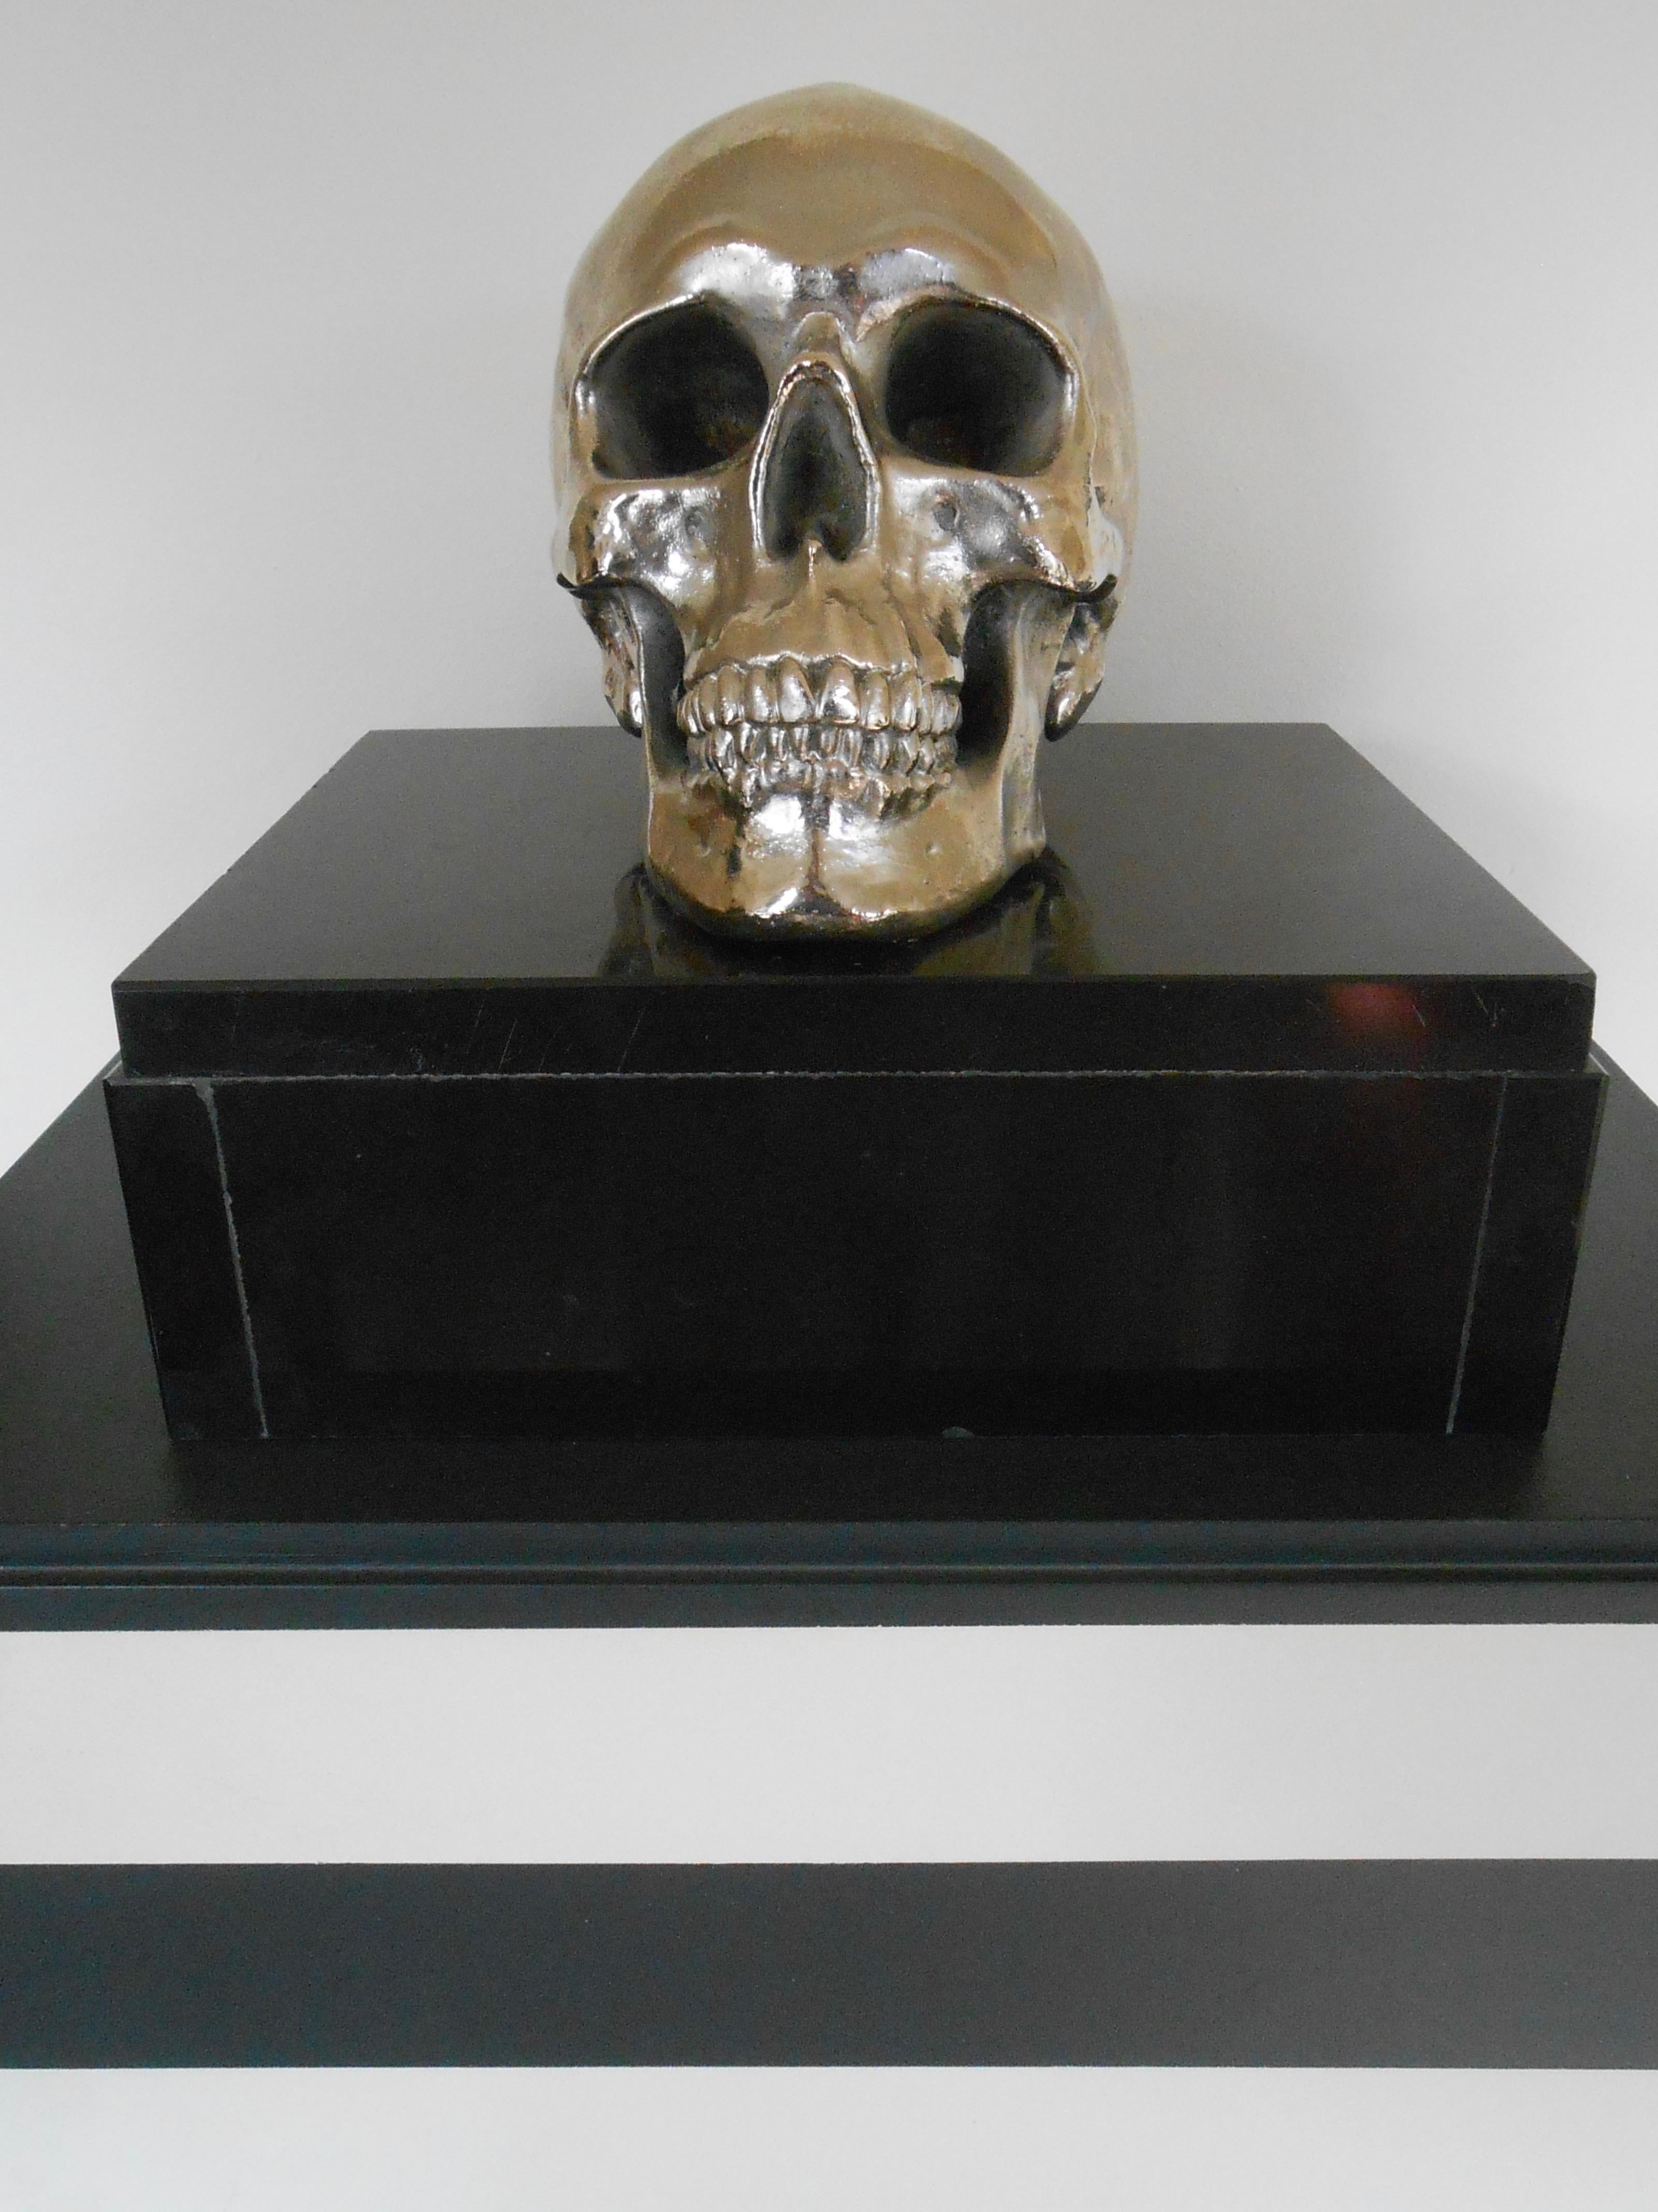 Massive Nickeled Resin Skull Signed Y.D., Belgium, 1989 For Sale 1